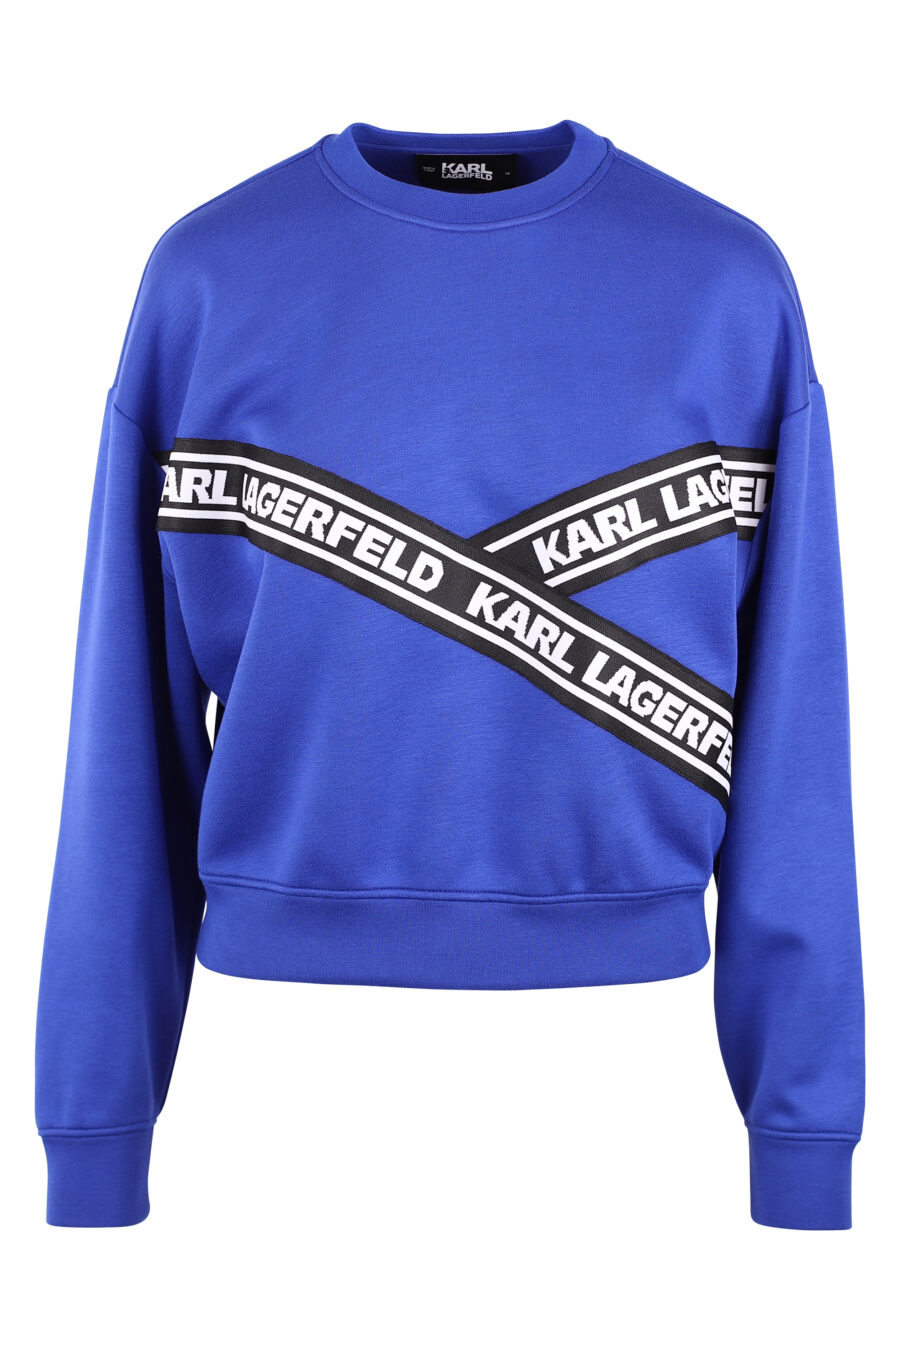 Blue sweatshirt with cross ribbon logo - IMG 6148